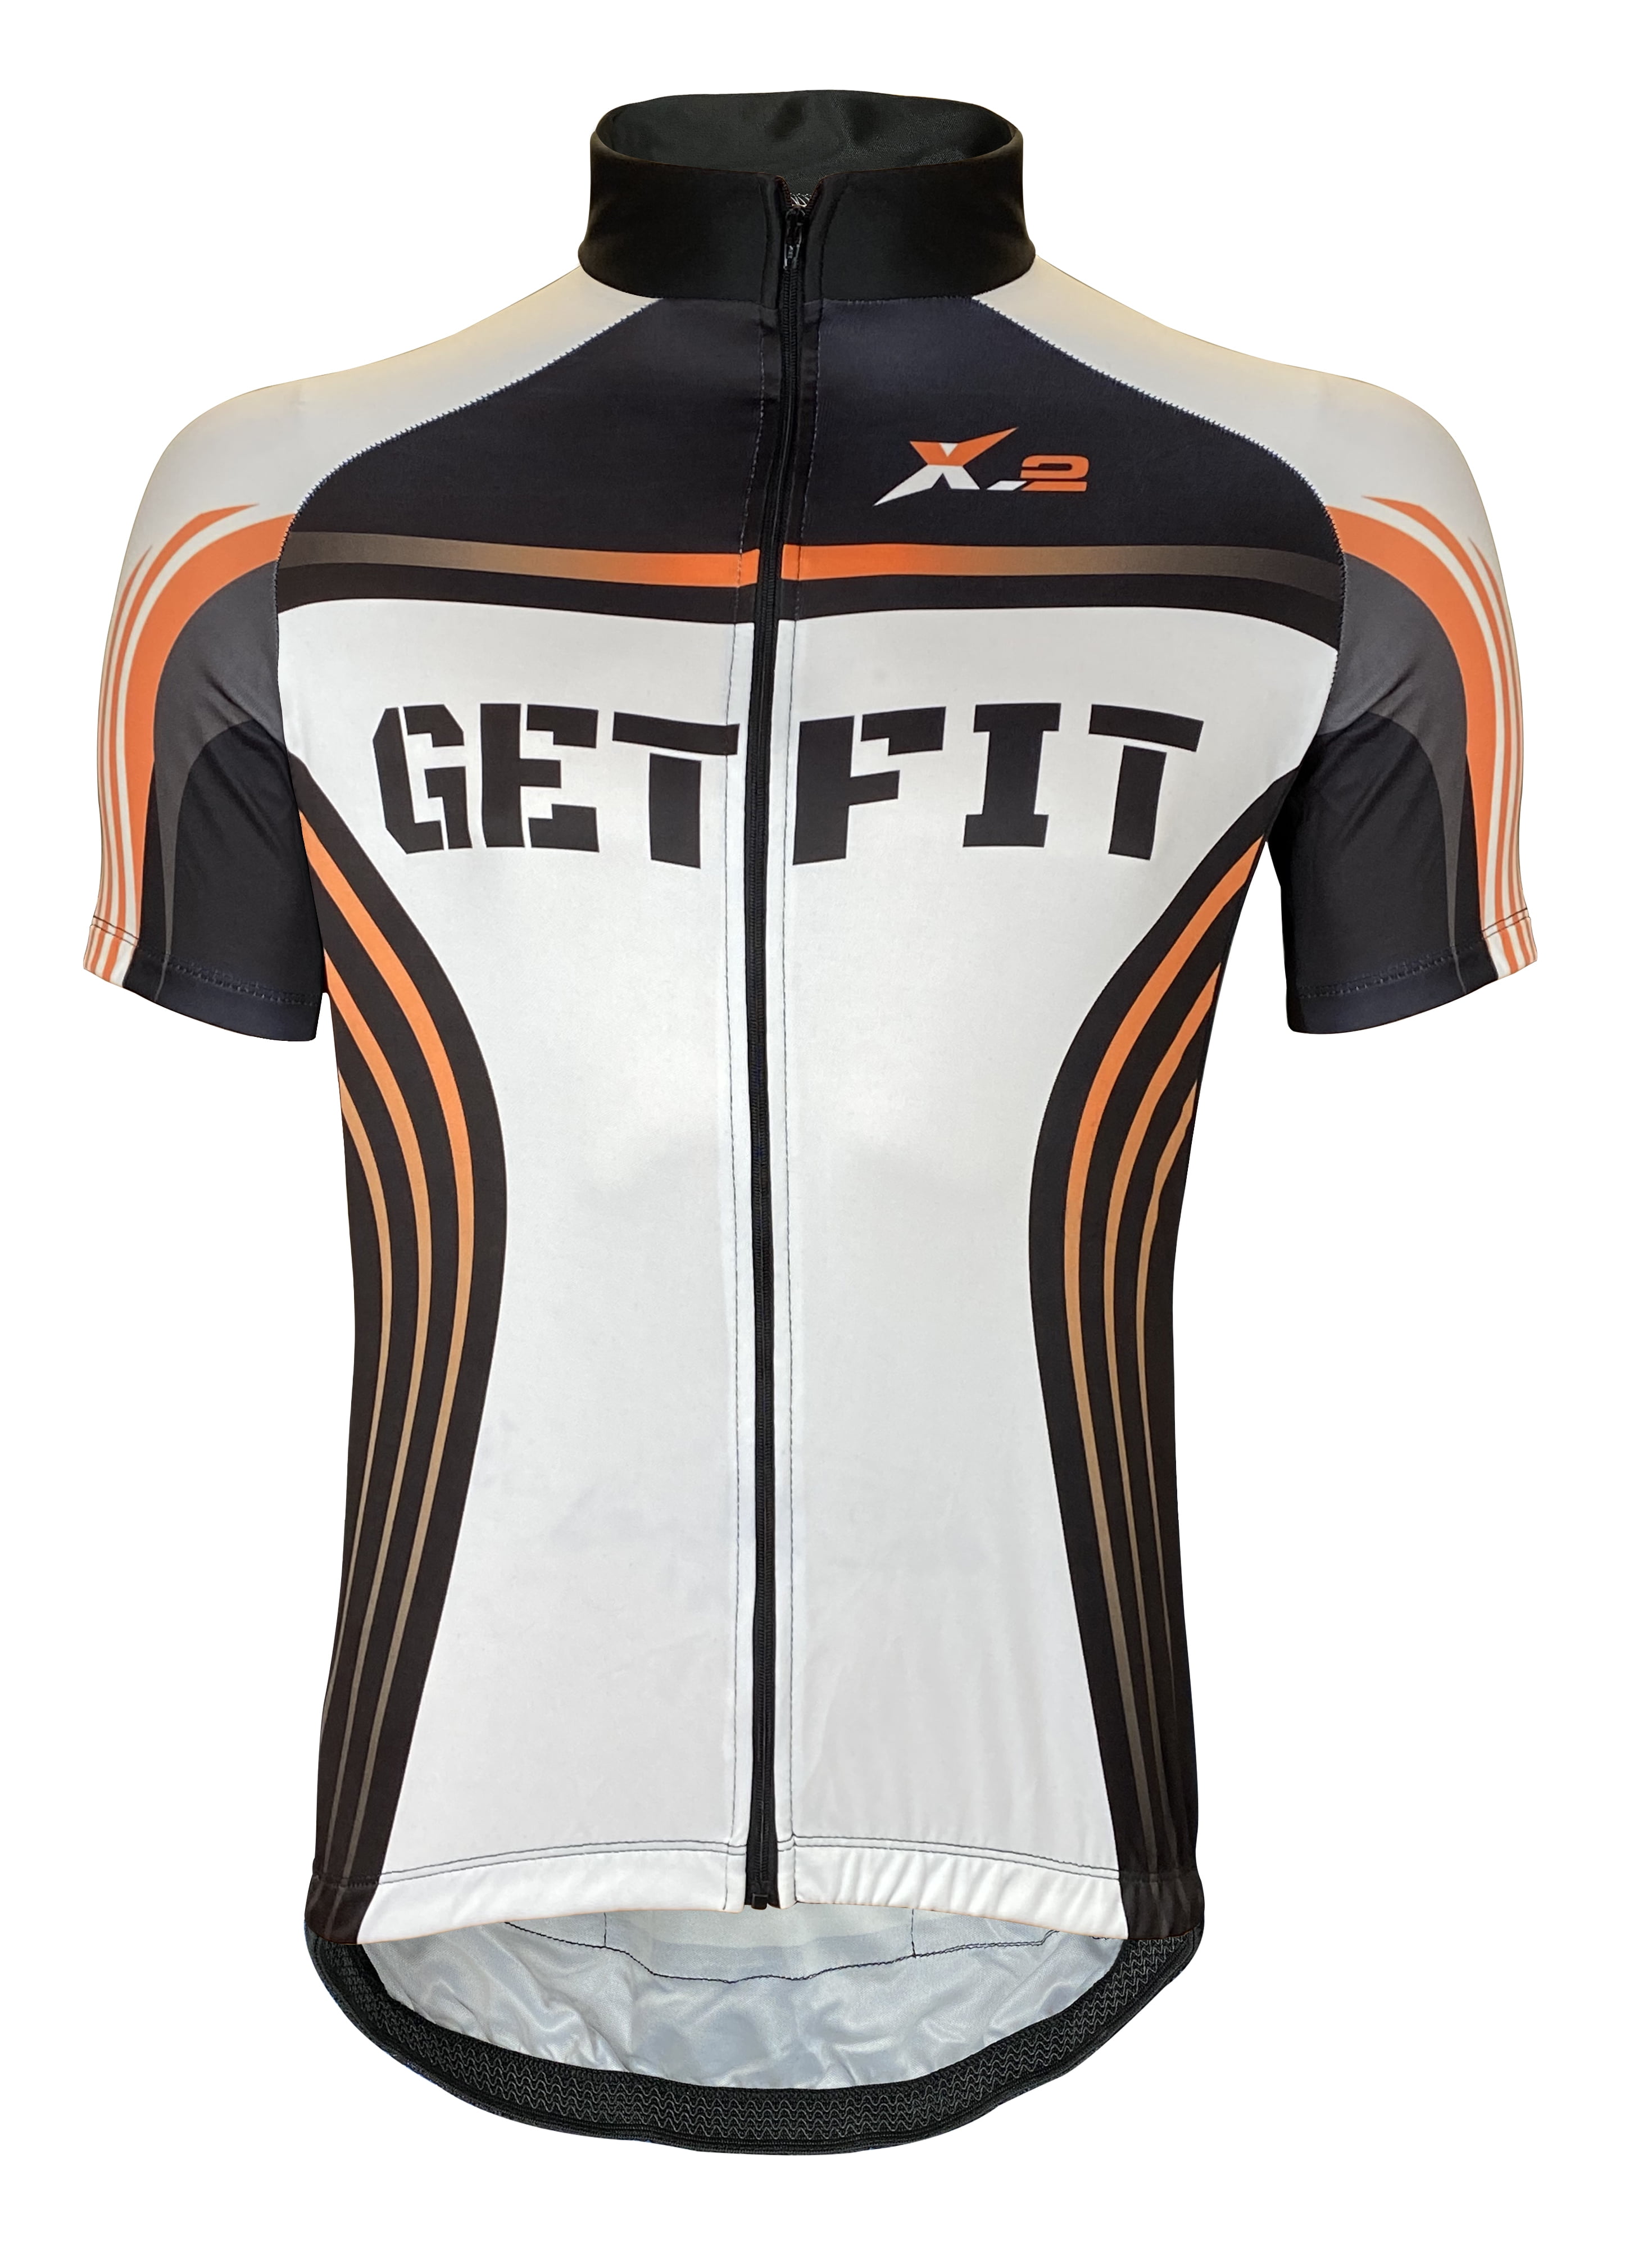 Star Team Racing Bike Pro Men‘s Bicycle Half Sleeve Cycling Jersey Shirts S-3XL 